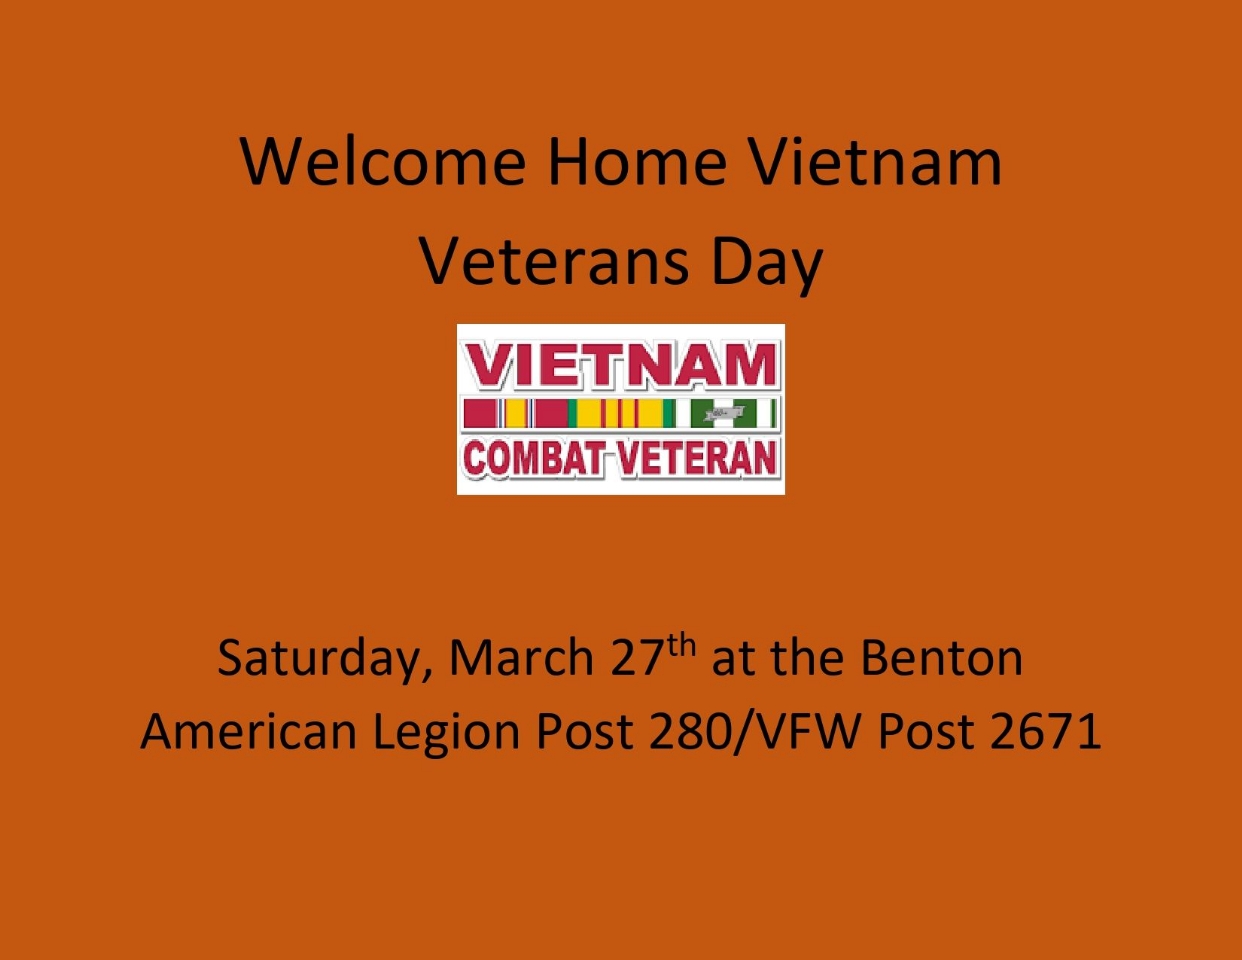 Welcome Home Vietnam Veterans Event 2021